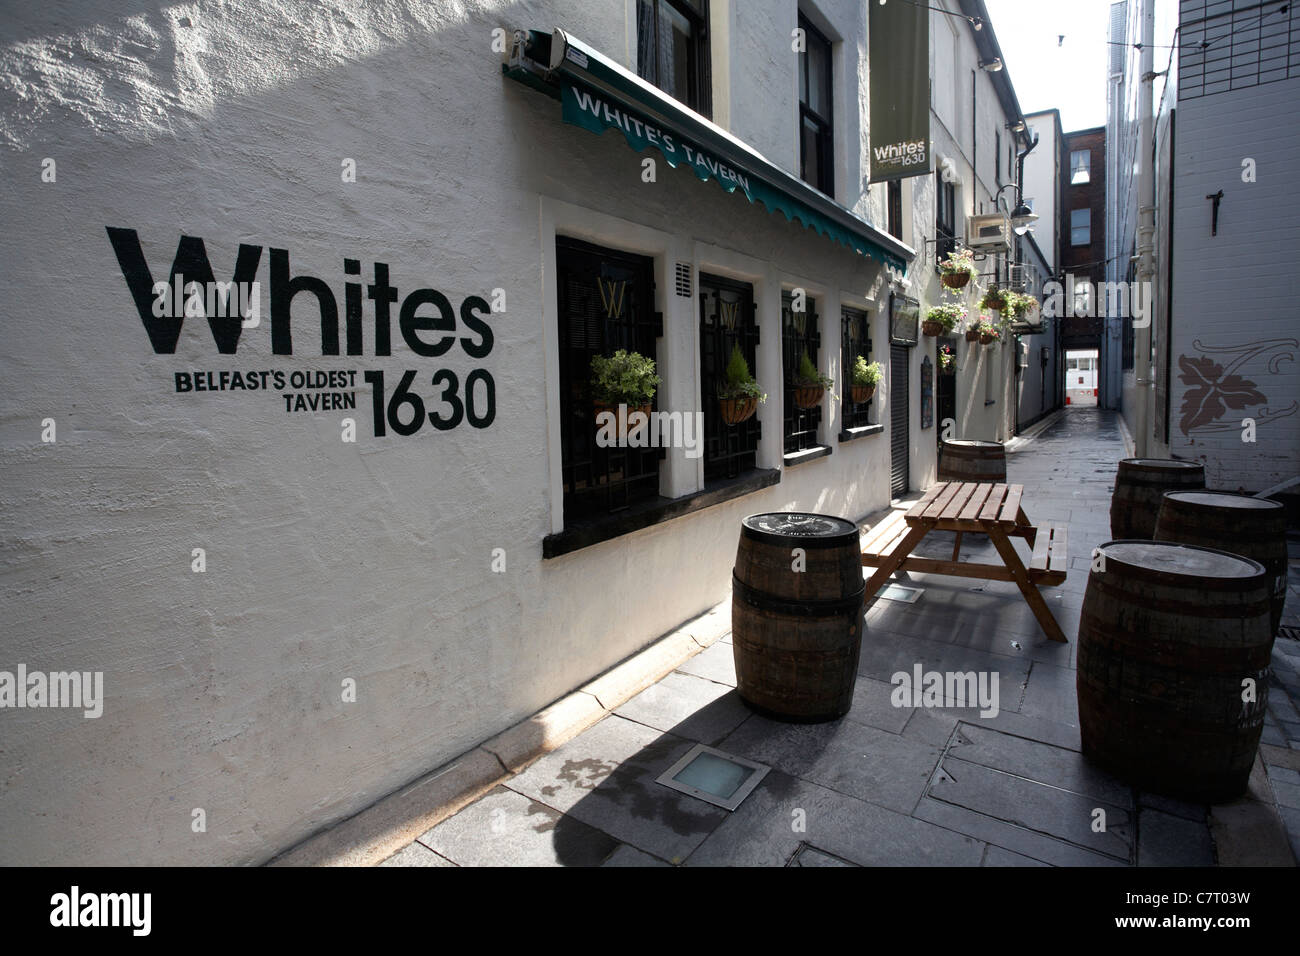 Whites Tavern, Belfasts oldest tavern established in 1630, Winecellar Entry, Belfast city centre, Northern Ireland, UK. Stock Photo